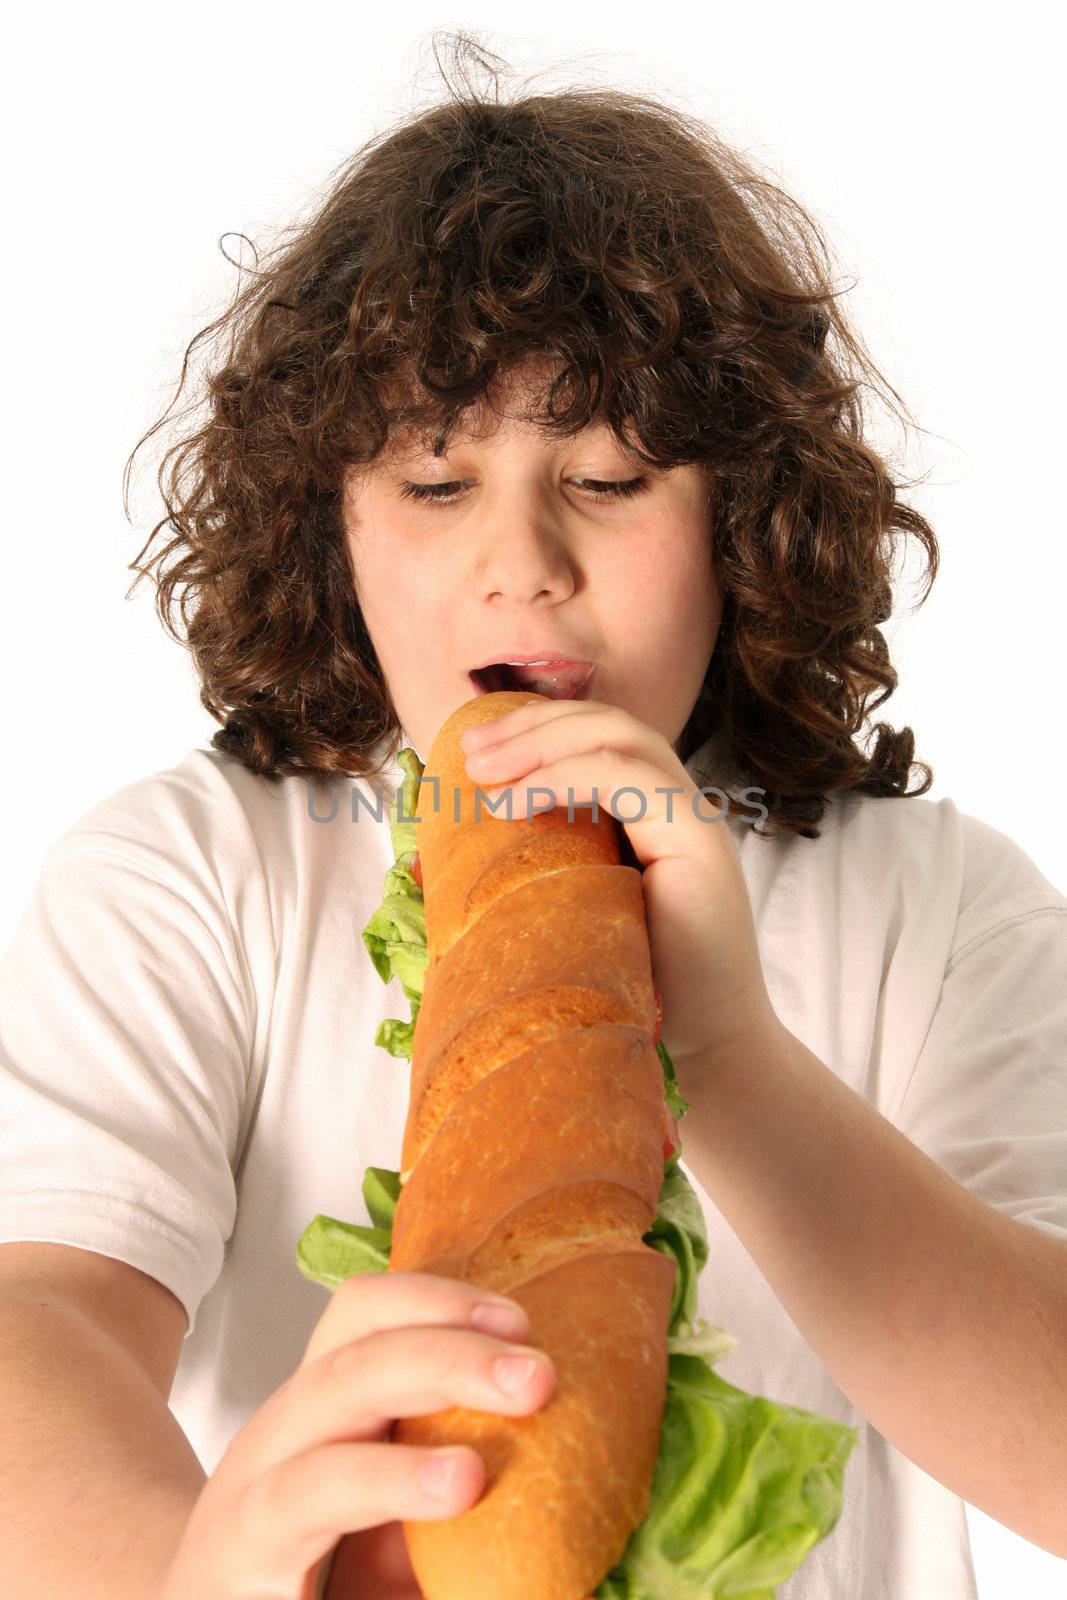 boy eating large sandwich  by vladacanon